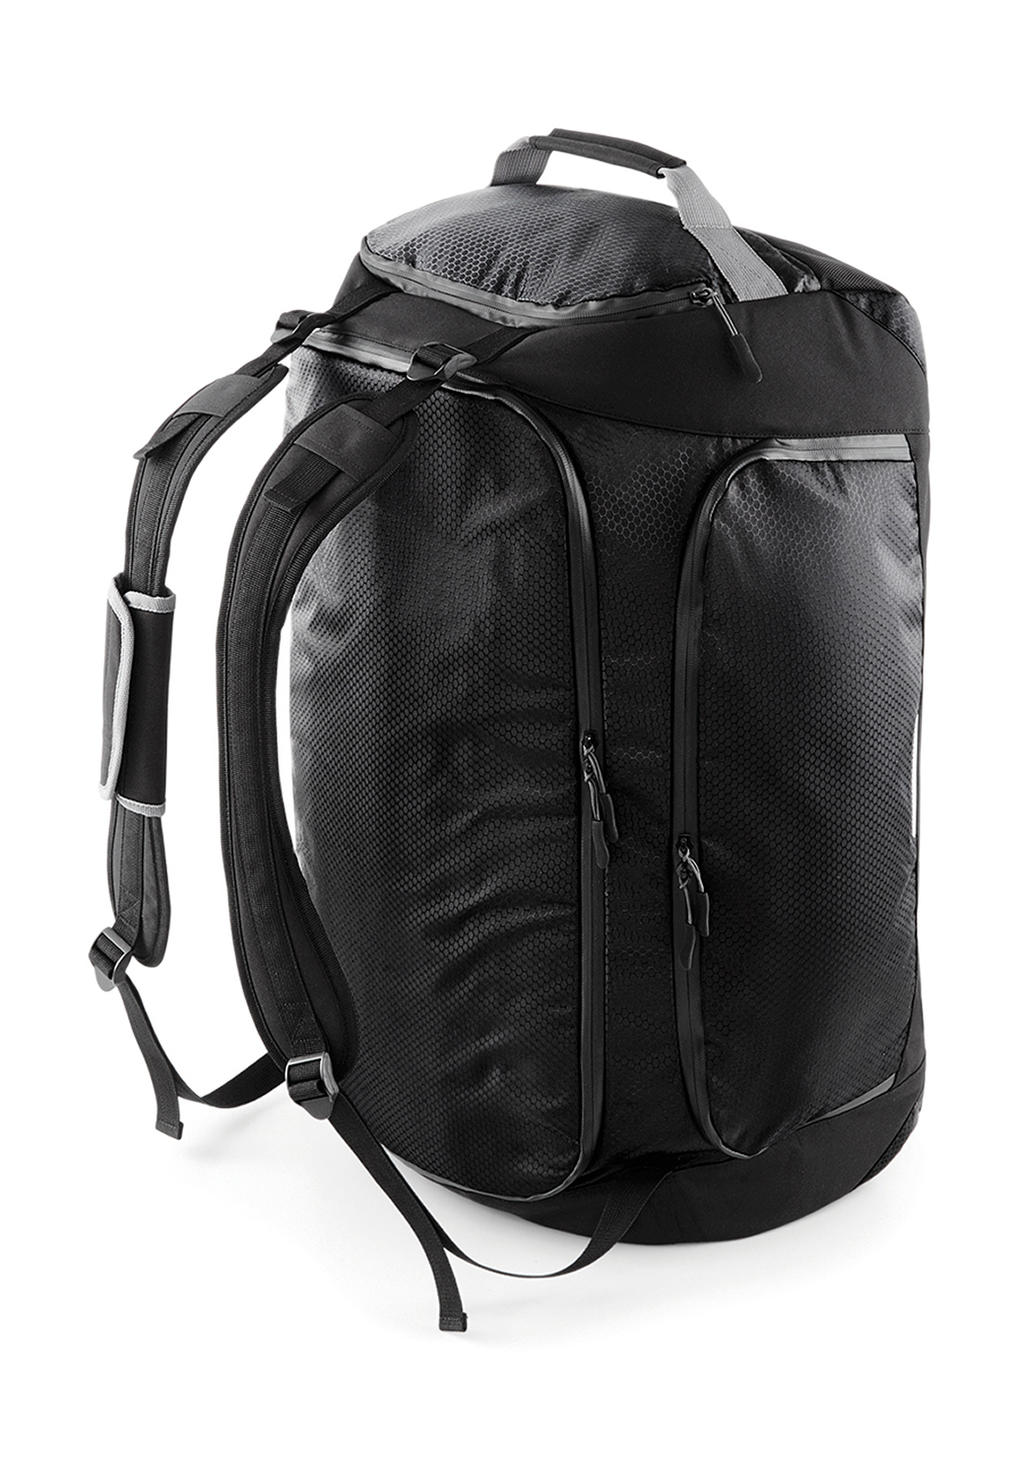  SLX 60 Litre Haul Bag in Farbe Black